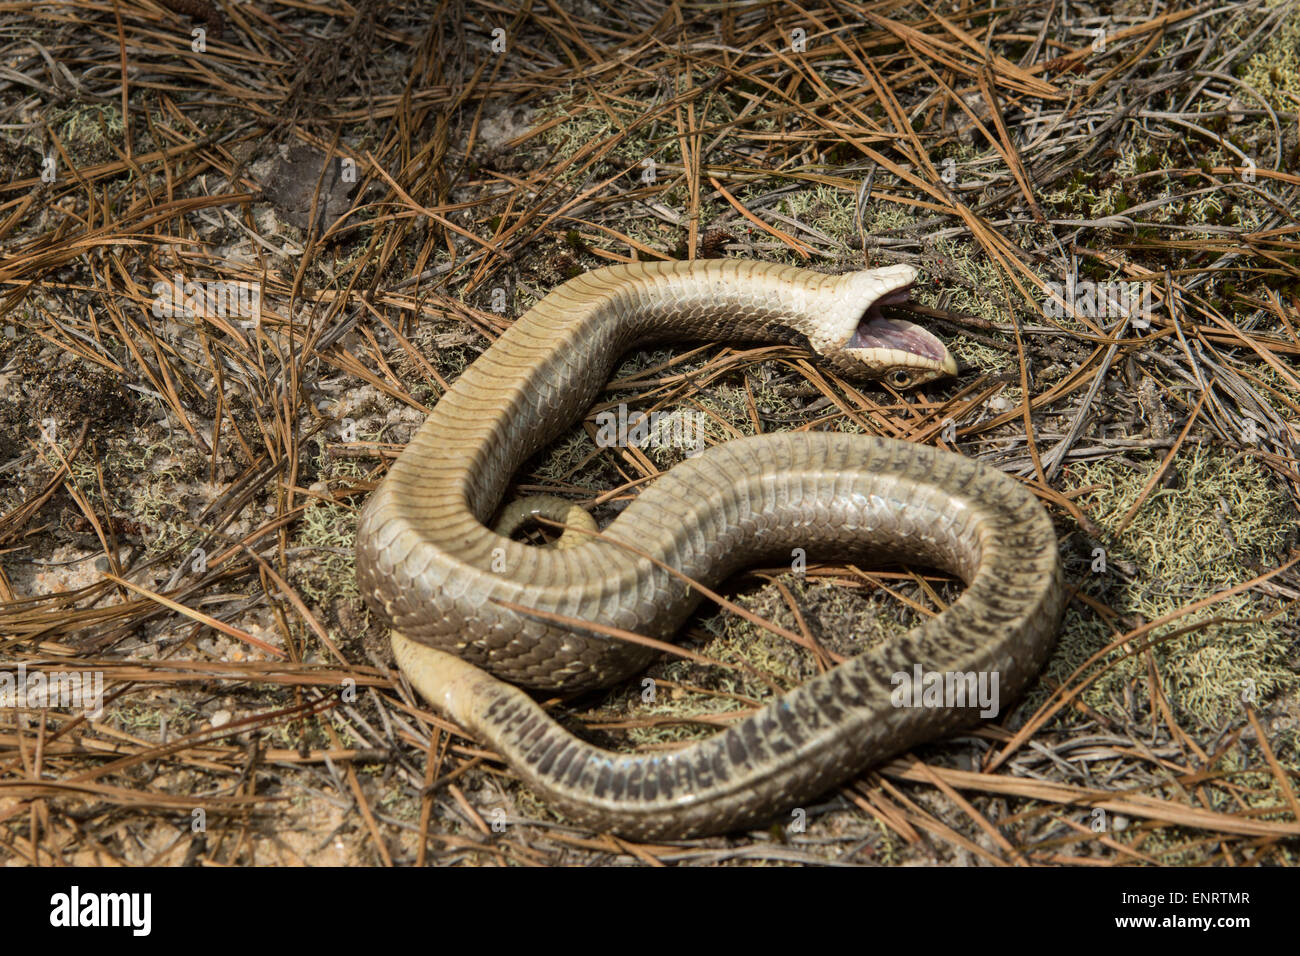 Photograph, Eastern Hognose Snake playing dead